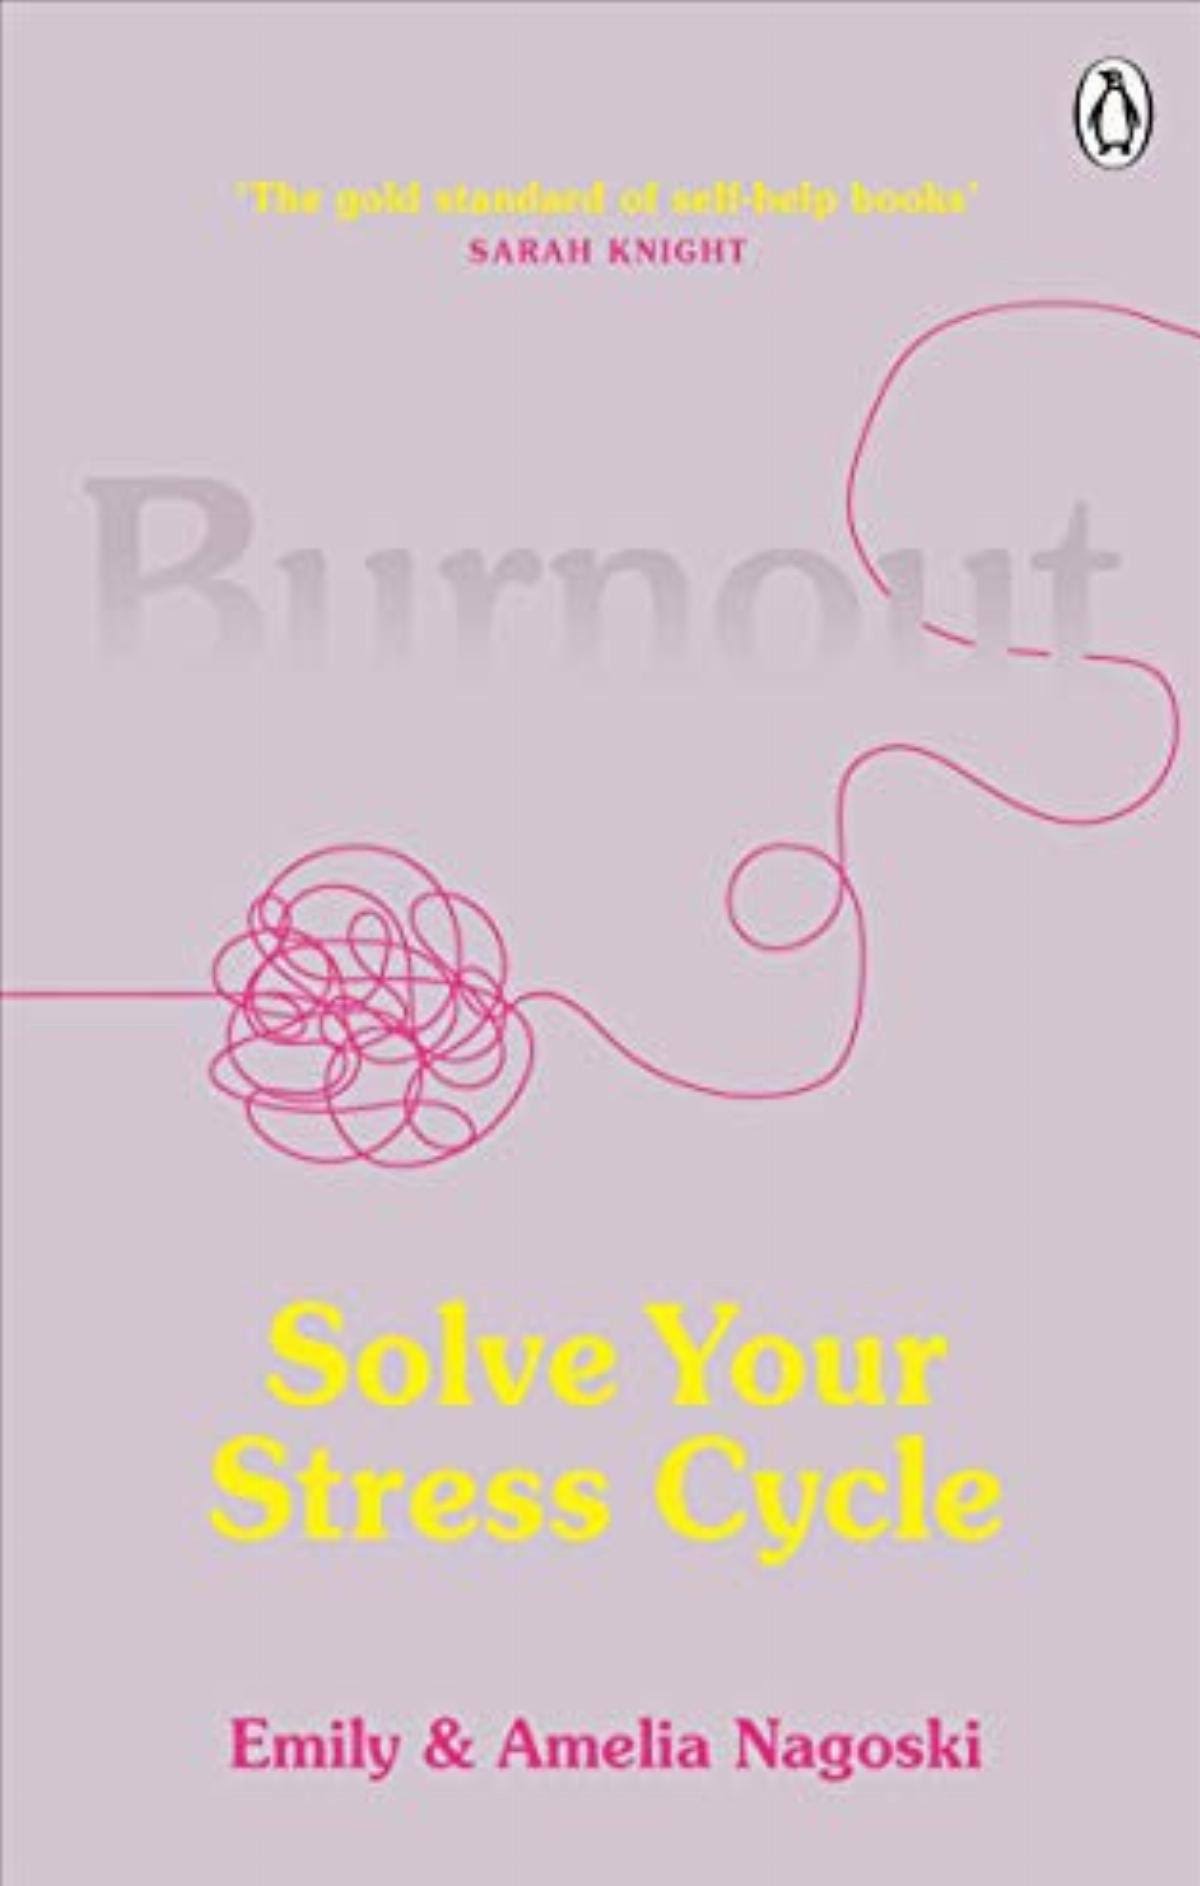 Burnout by Emily Nagoski